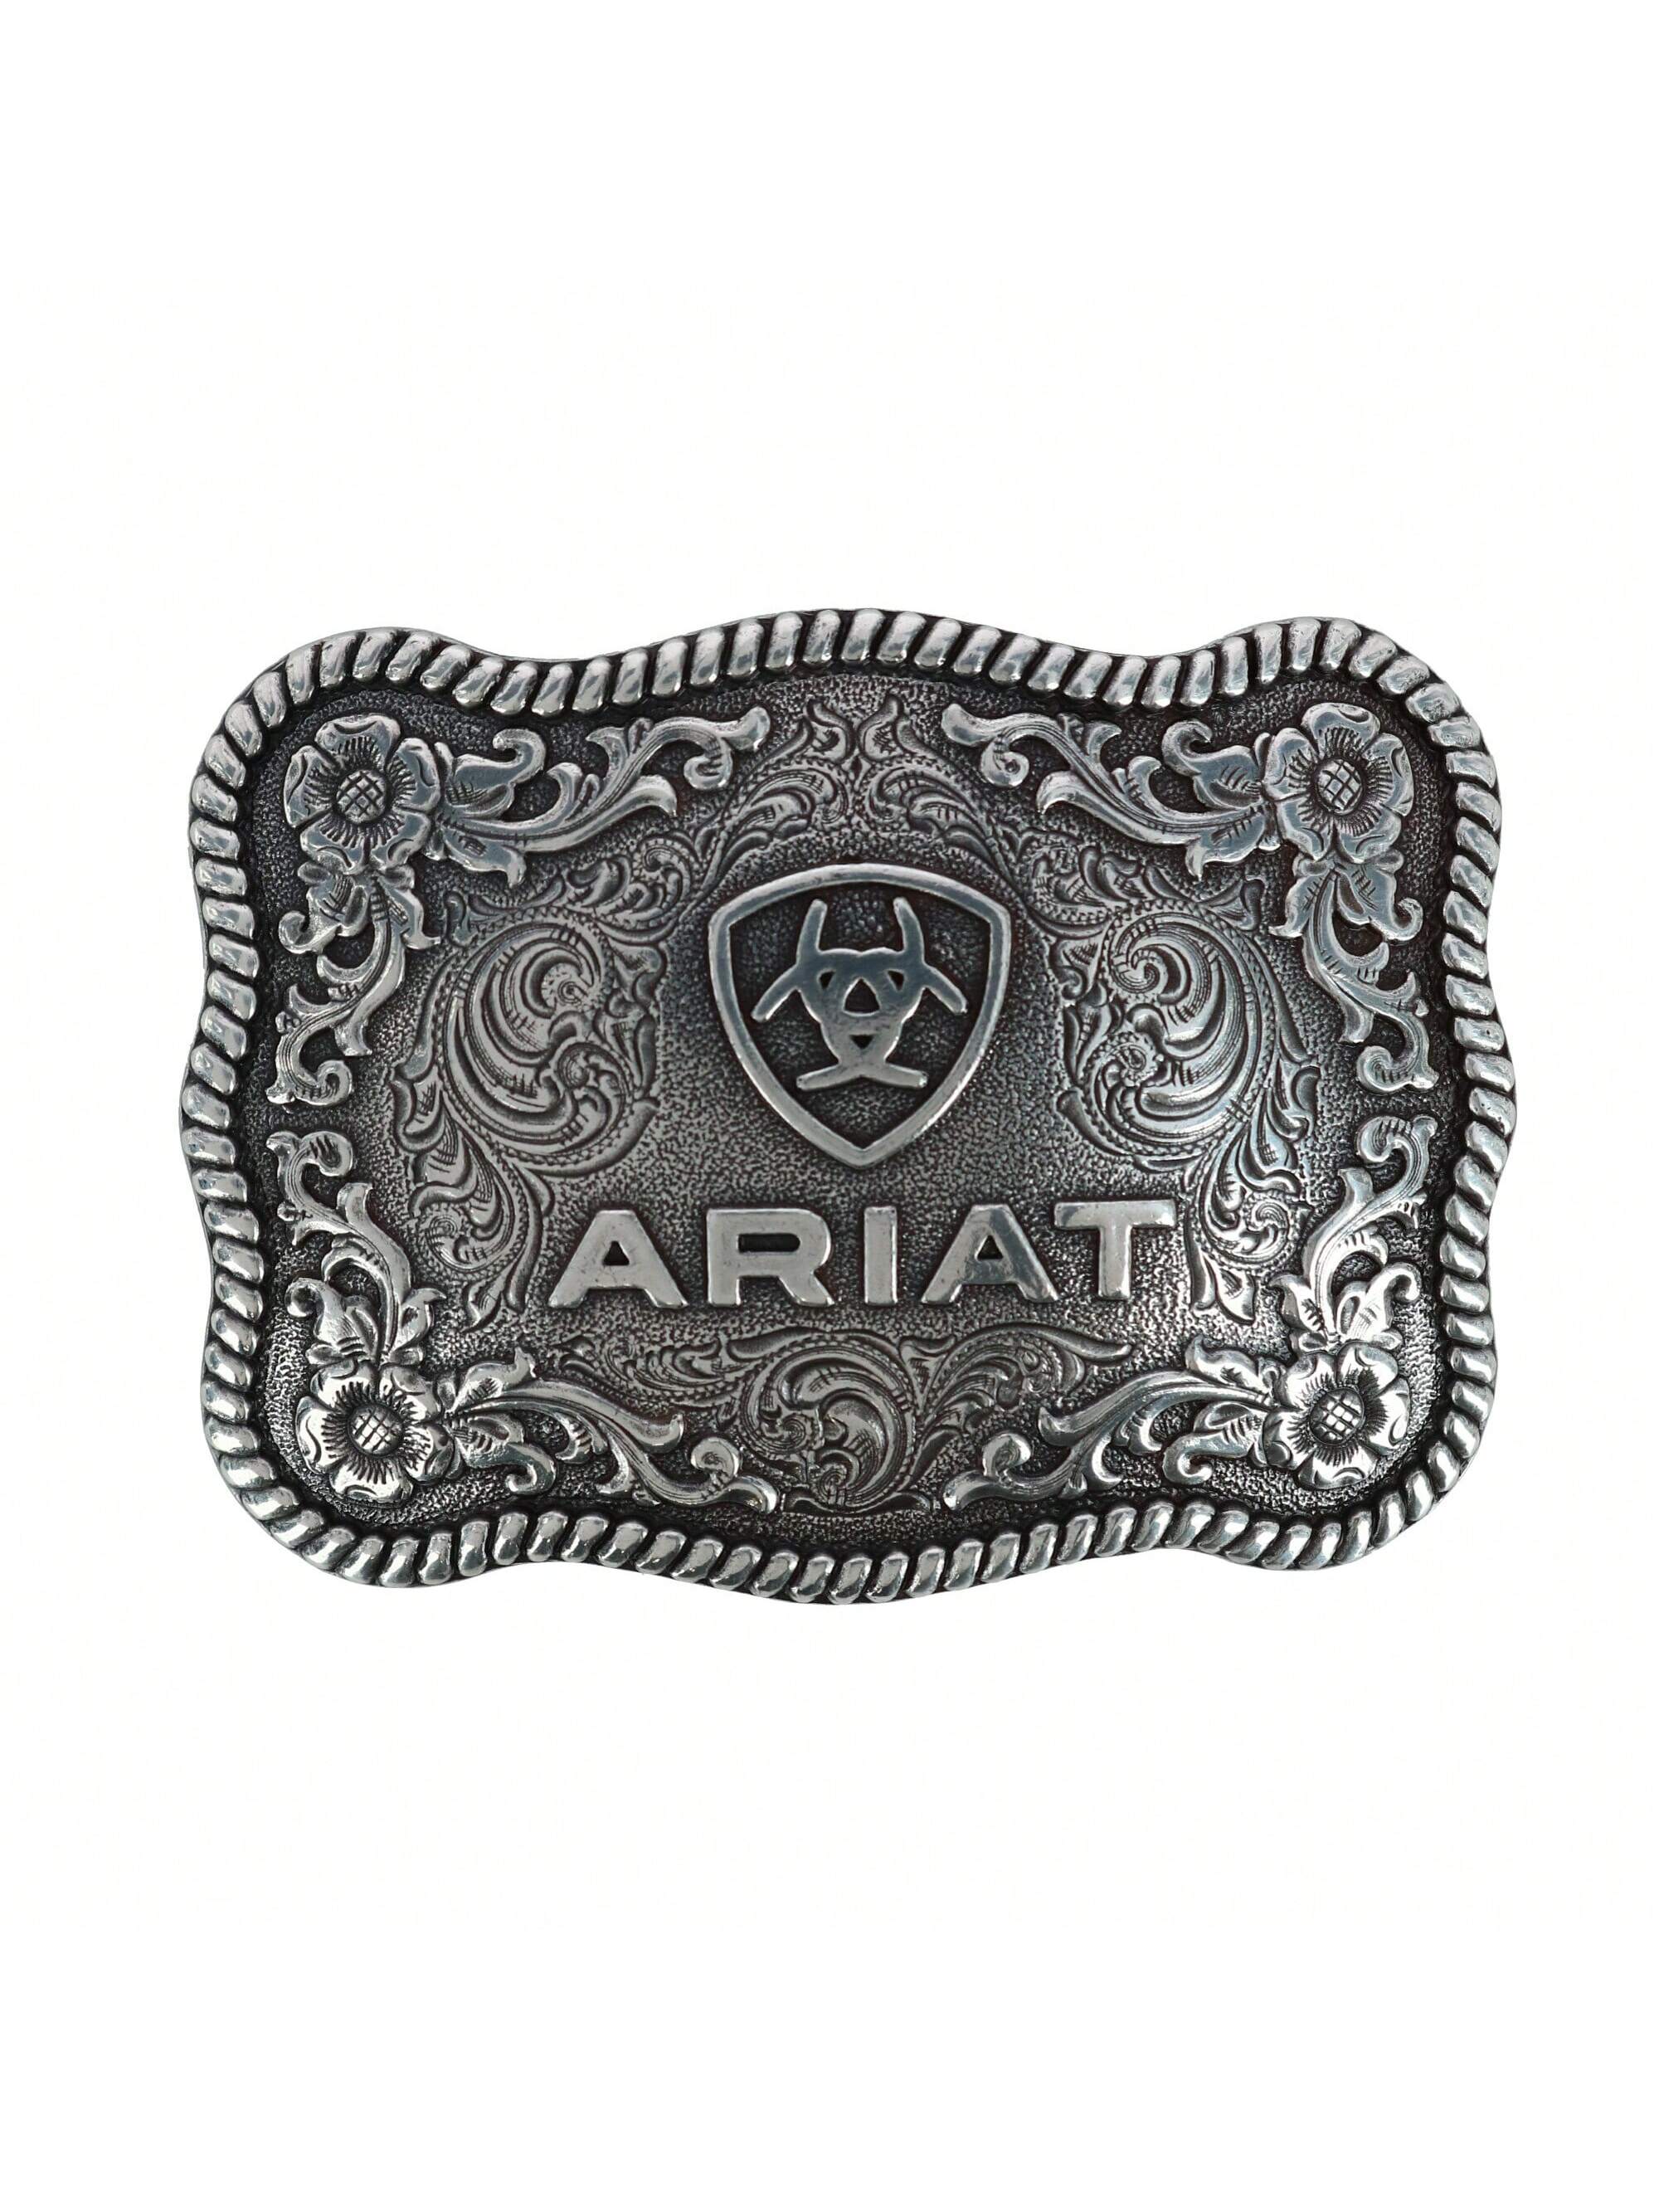 Пряжка для ремня с логотипом Ariat, серебро